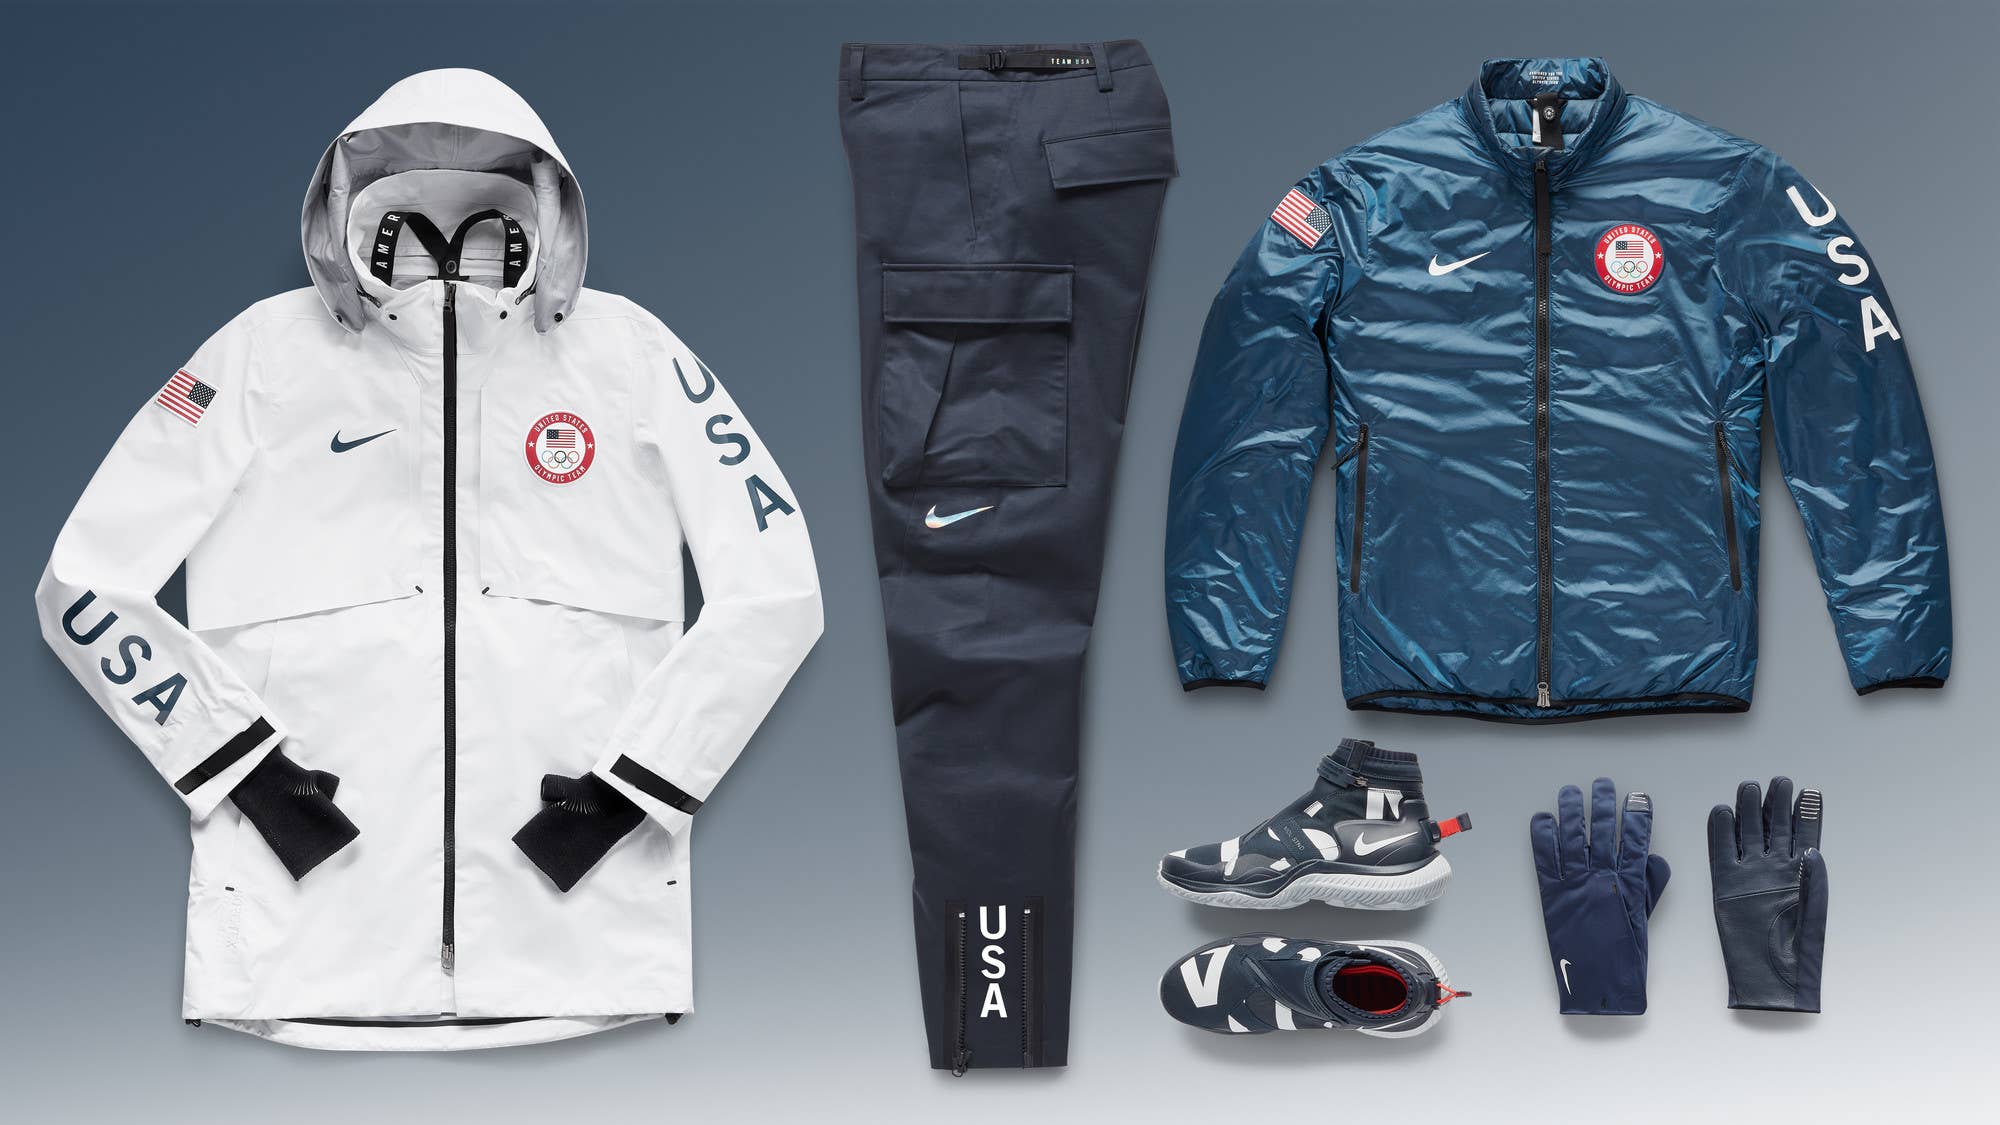 Nike Team USA Medal Stand Apparel 2018 Winter Olympics (Men)